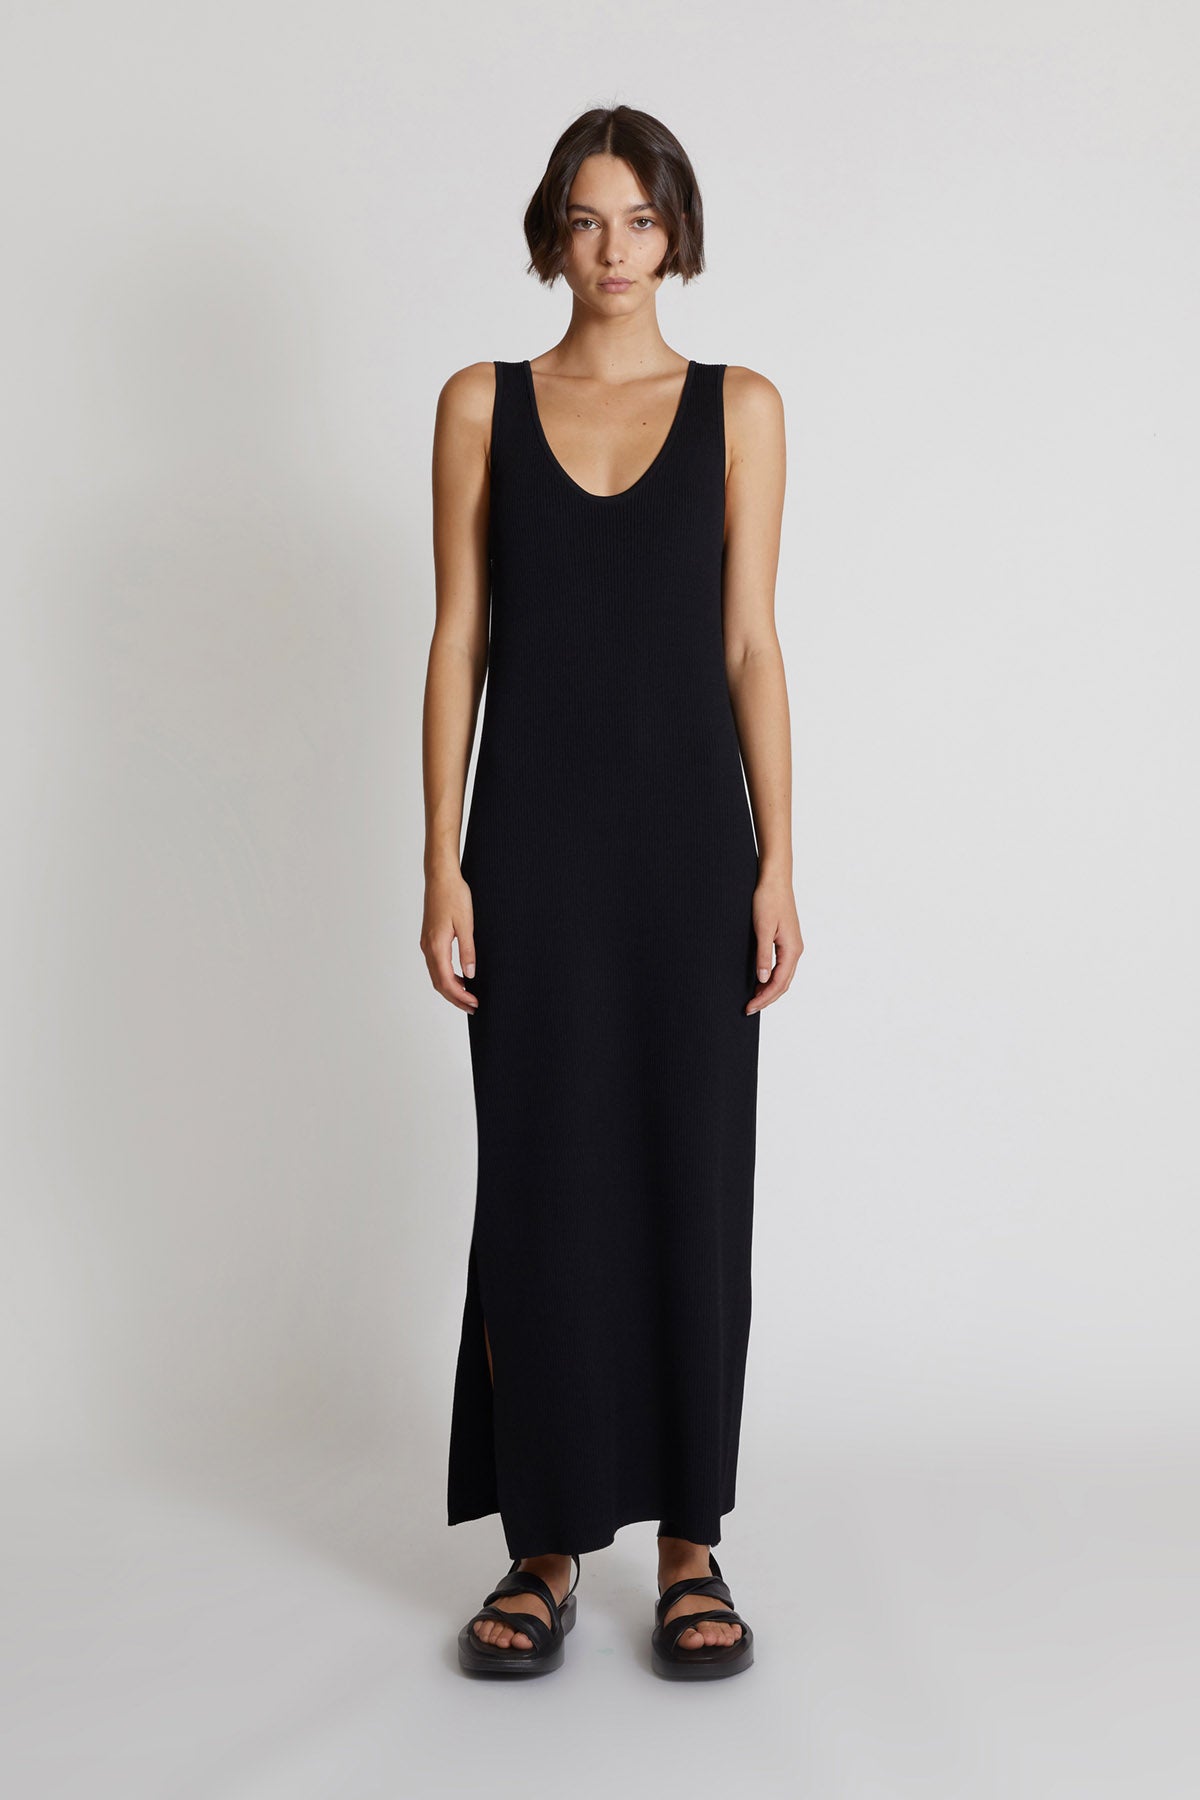 Camilla & Marc Swanson Knit Dress – Marval Designs